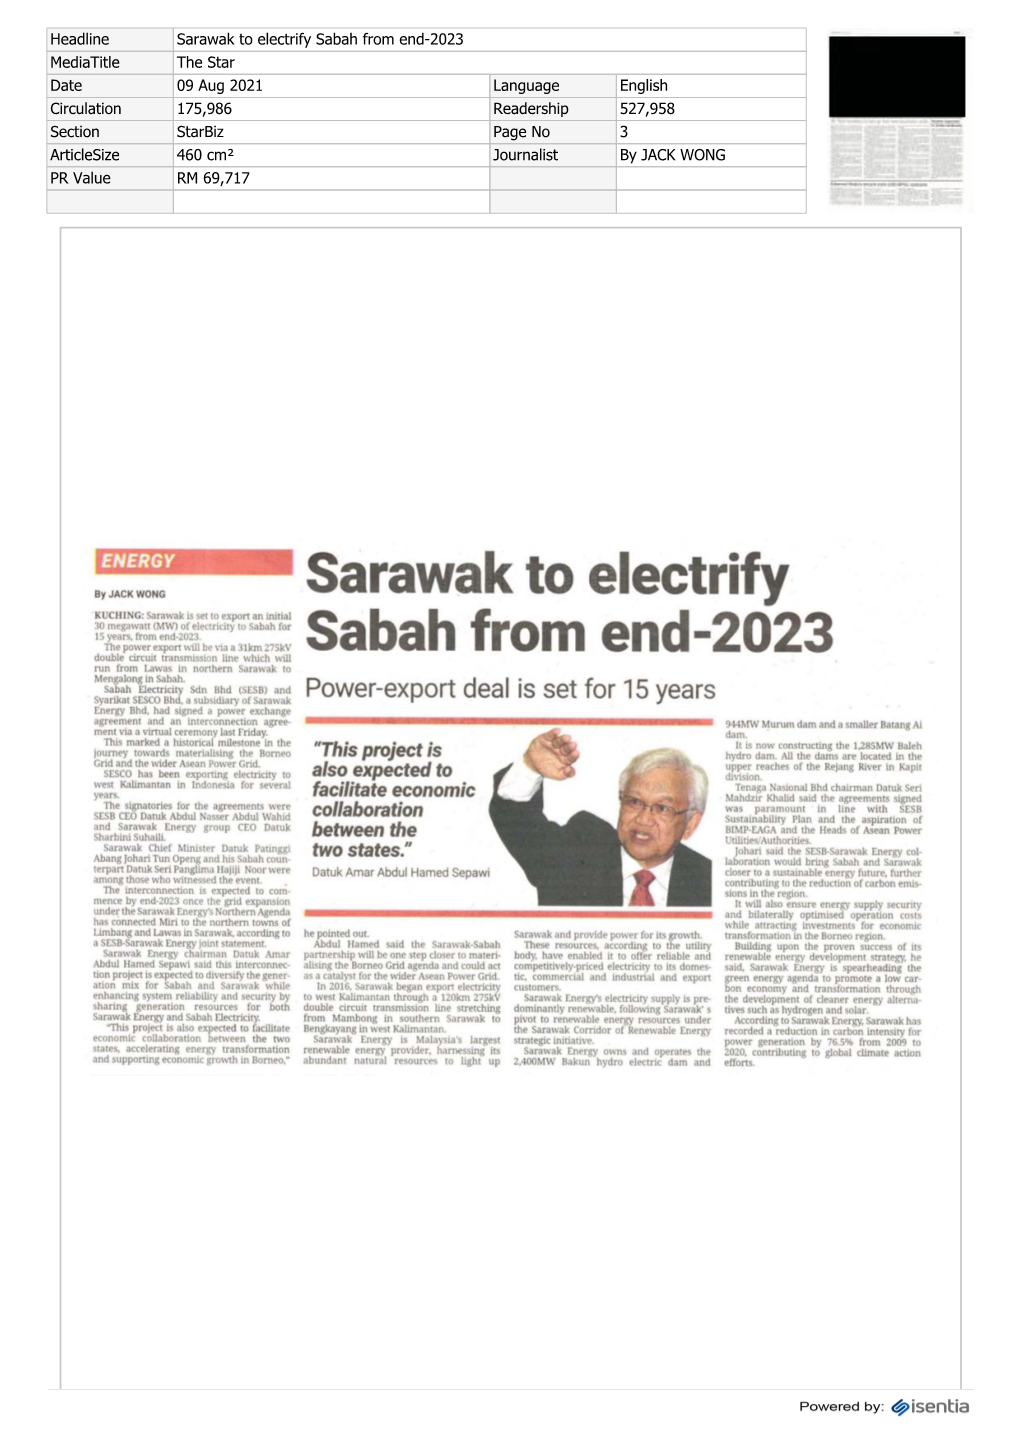 Sarawak to Electrify Sabah from End-2023